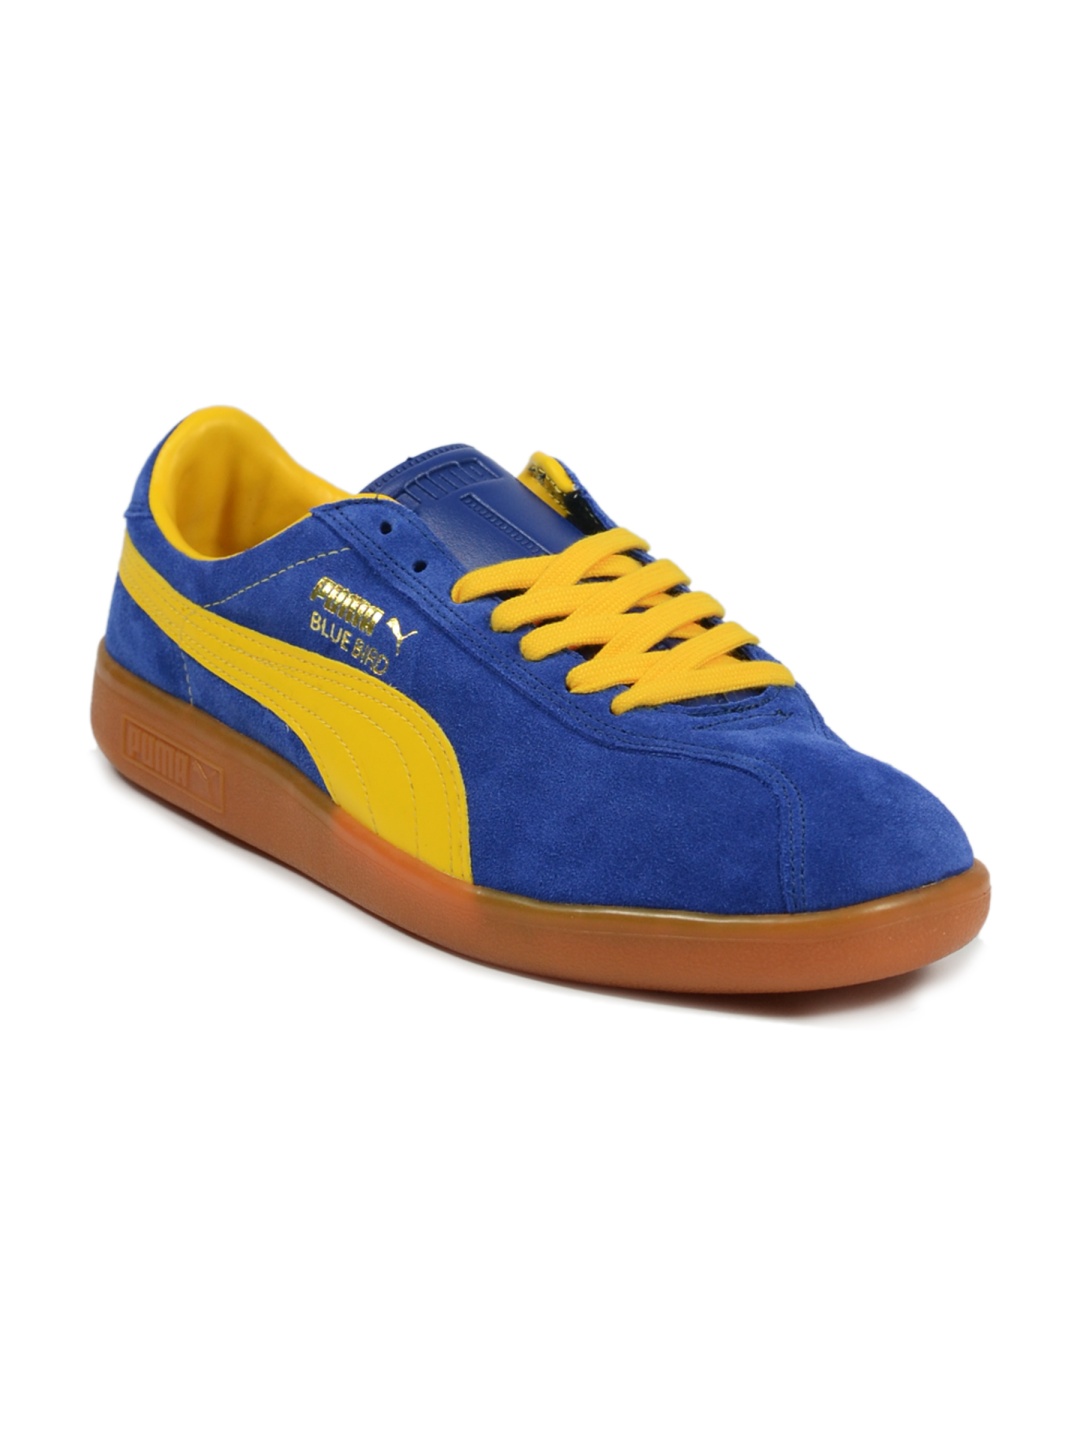 Puma Men's Bluebird Blue Yellow Shoe price Myntra. Casual Shoes Deals ...